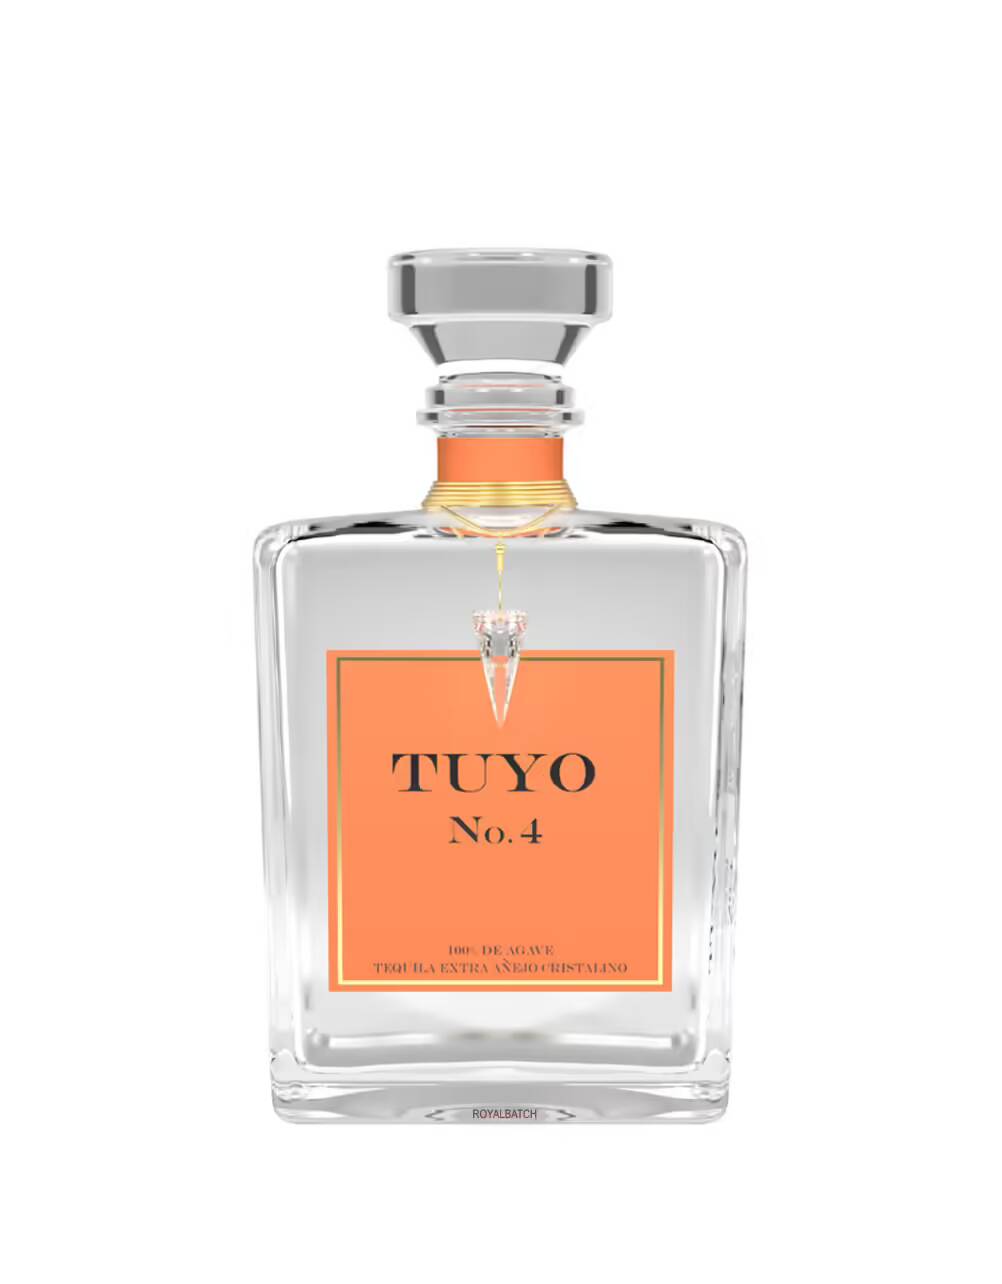 Tuyo Extra Anejo Cristalino Tequila No 4 375ml